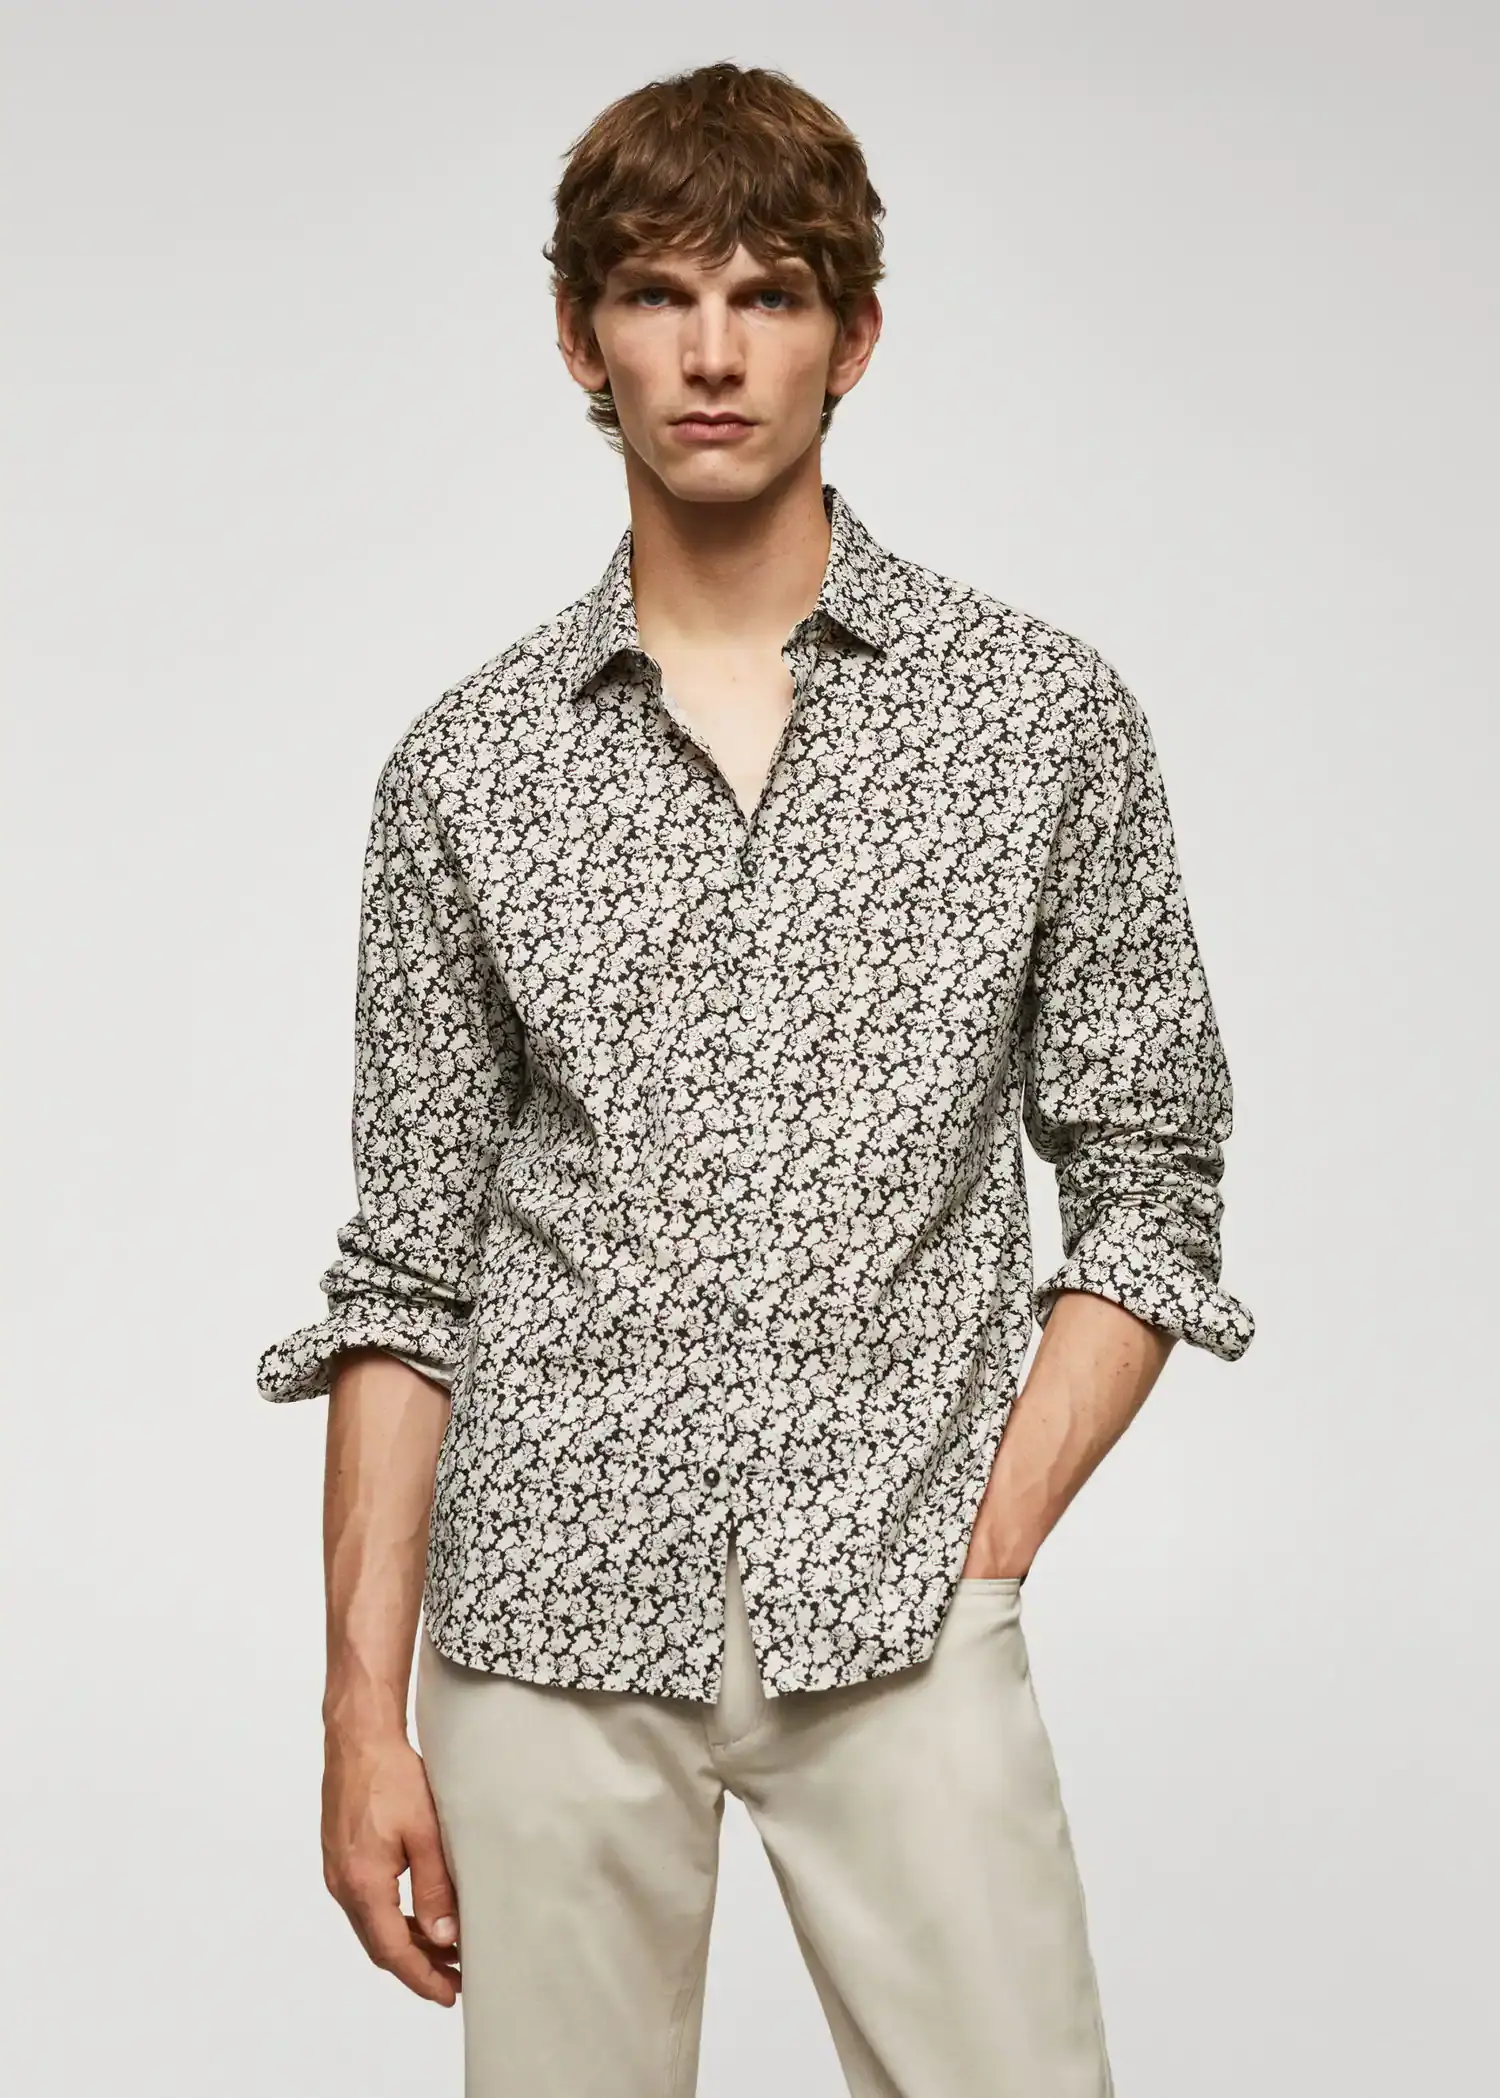 Mango 100% cotton floral-print shirt. 1